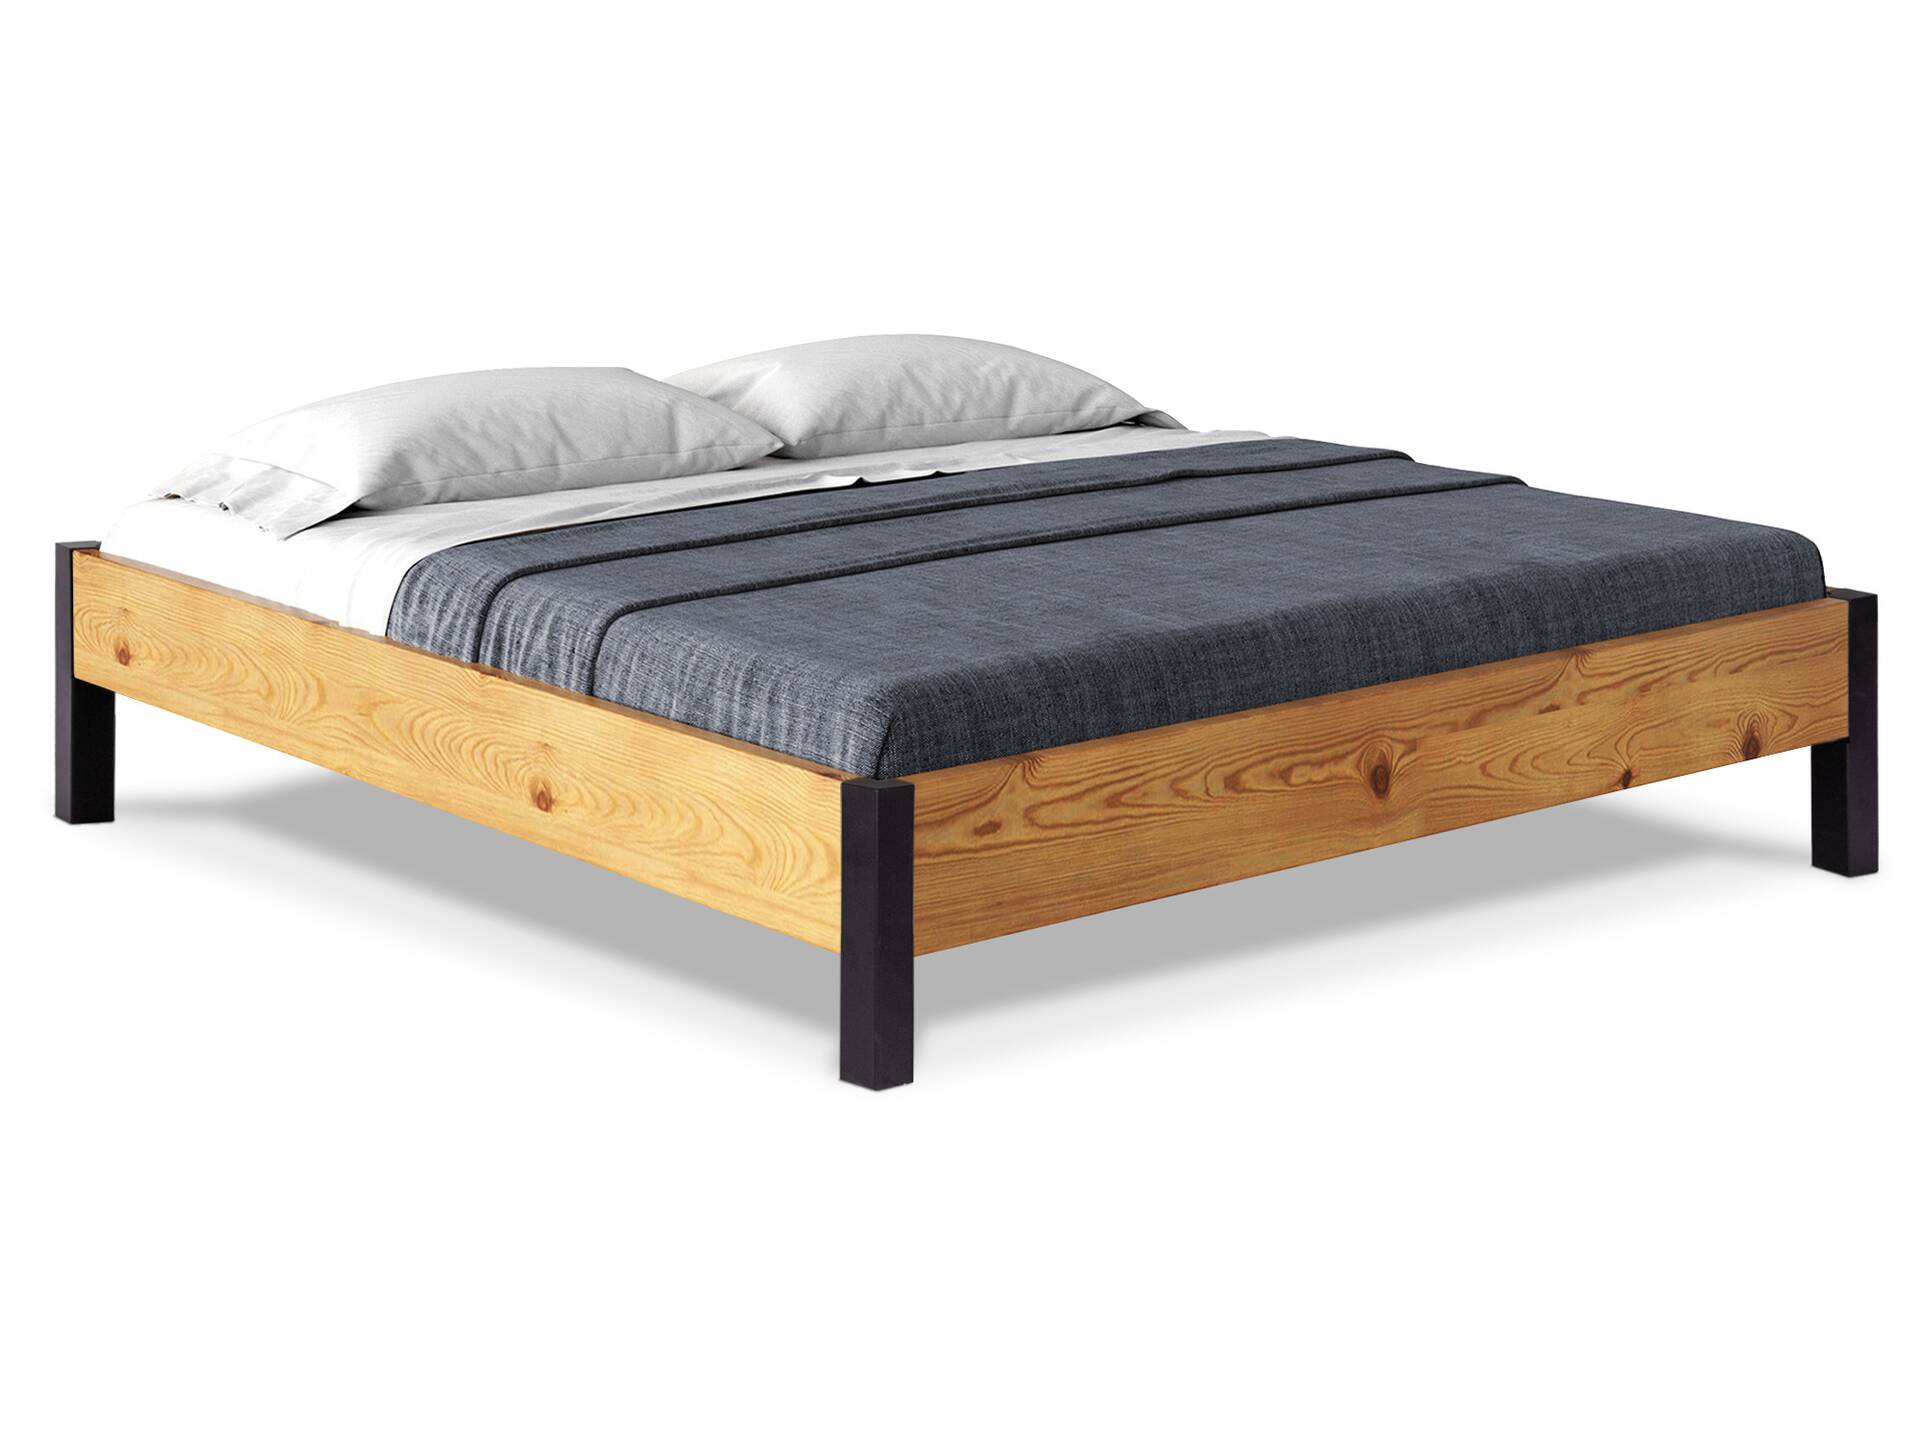 CURBY Bett Metallfuß, mit/ohne Kopfteil, Material Massivholz, rustikale Altholzoptik, Fichte 120 x 200 cm | natur | ohne Kopfteil